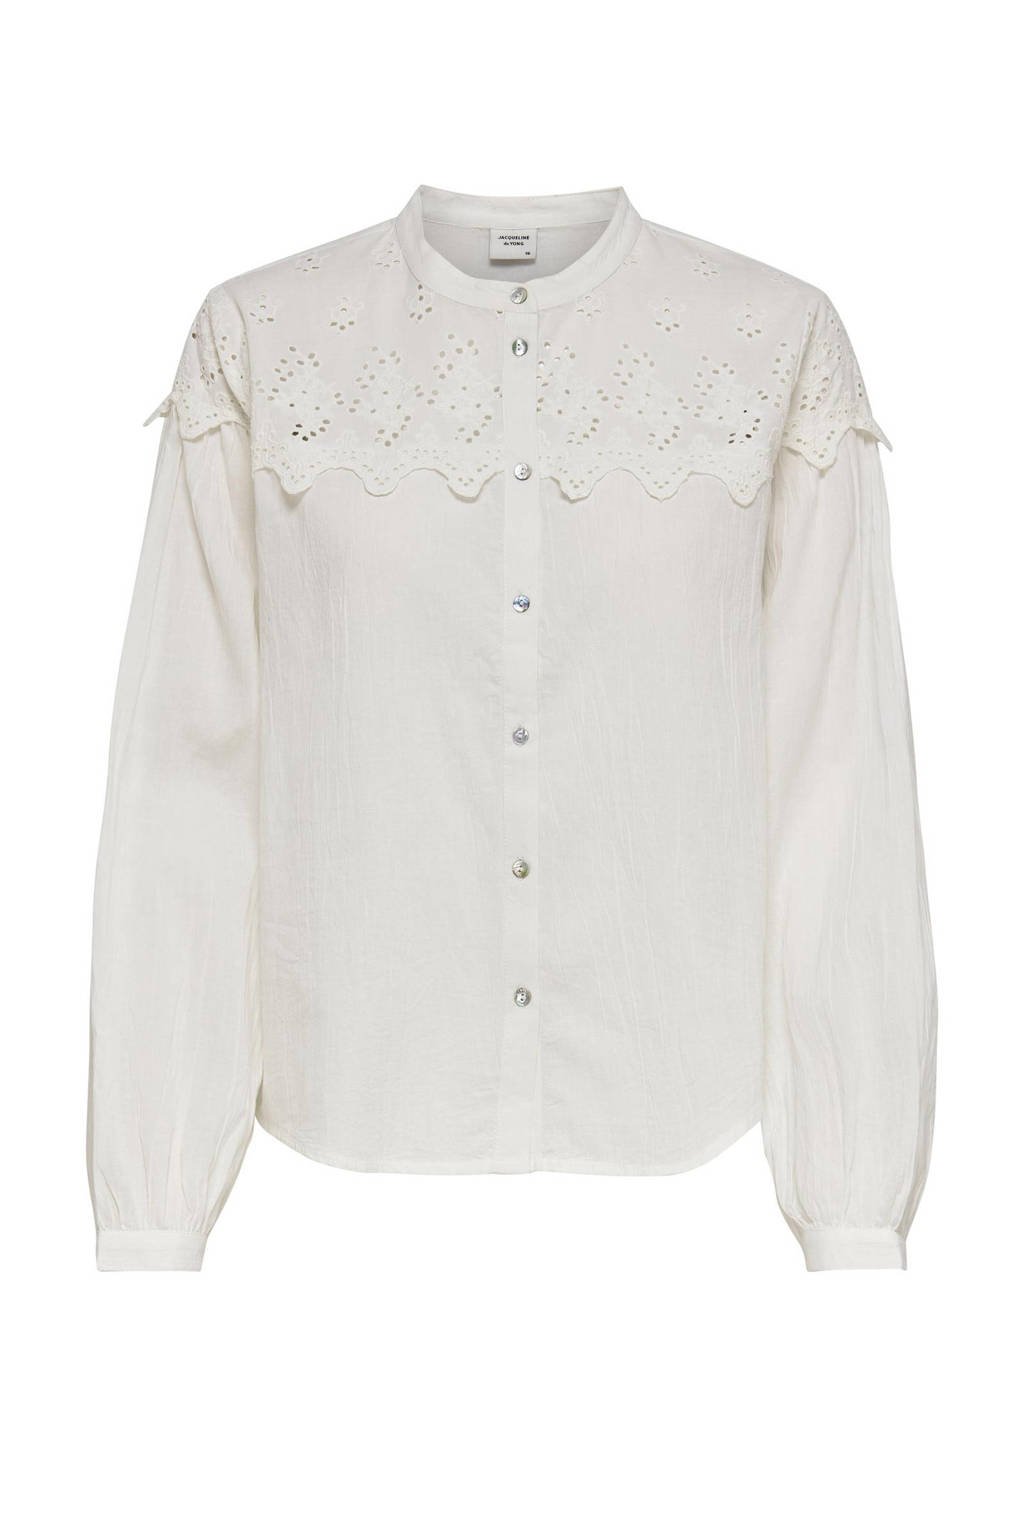 Witte dames JDY blouse van katoen met lange mouwen, mao kraag, knoopsluiting en kant